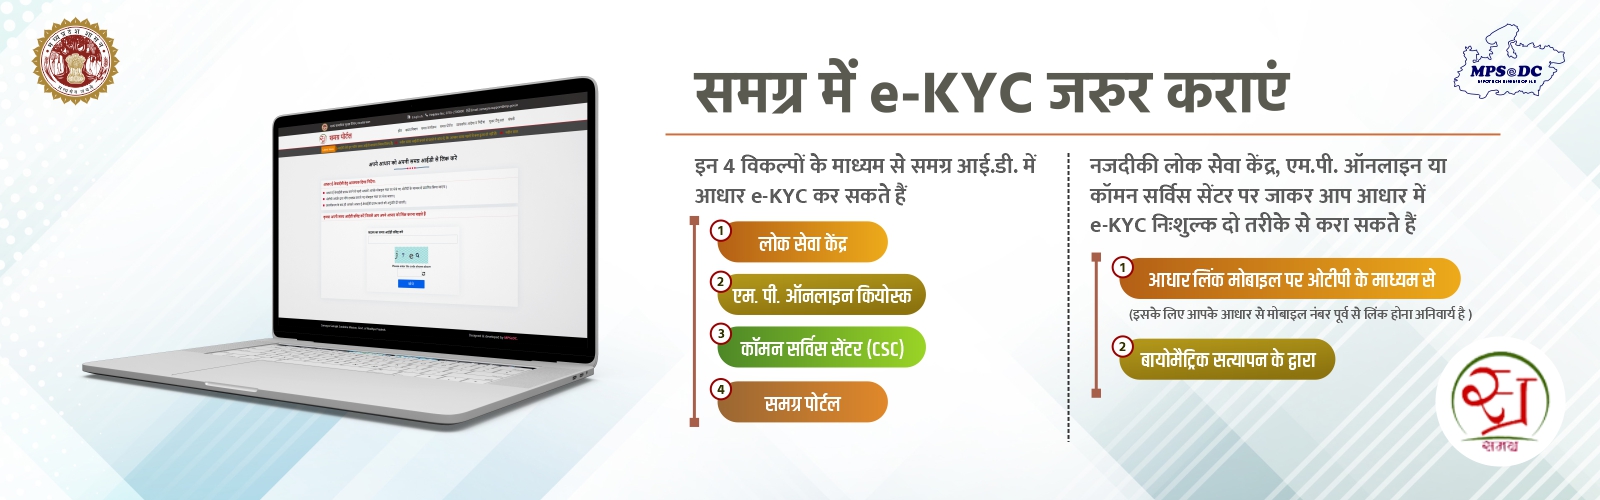 e-KYC Slide1